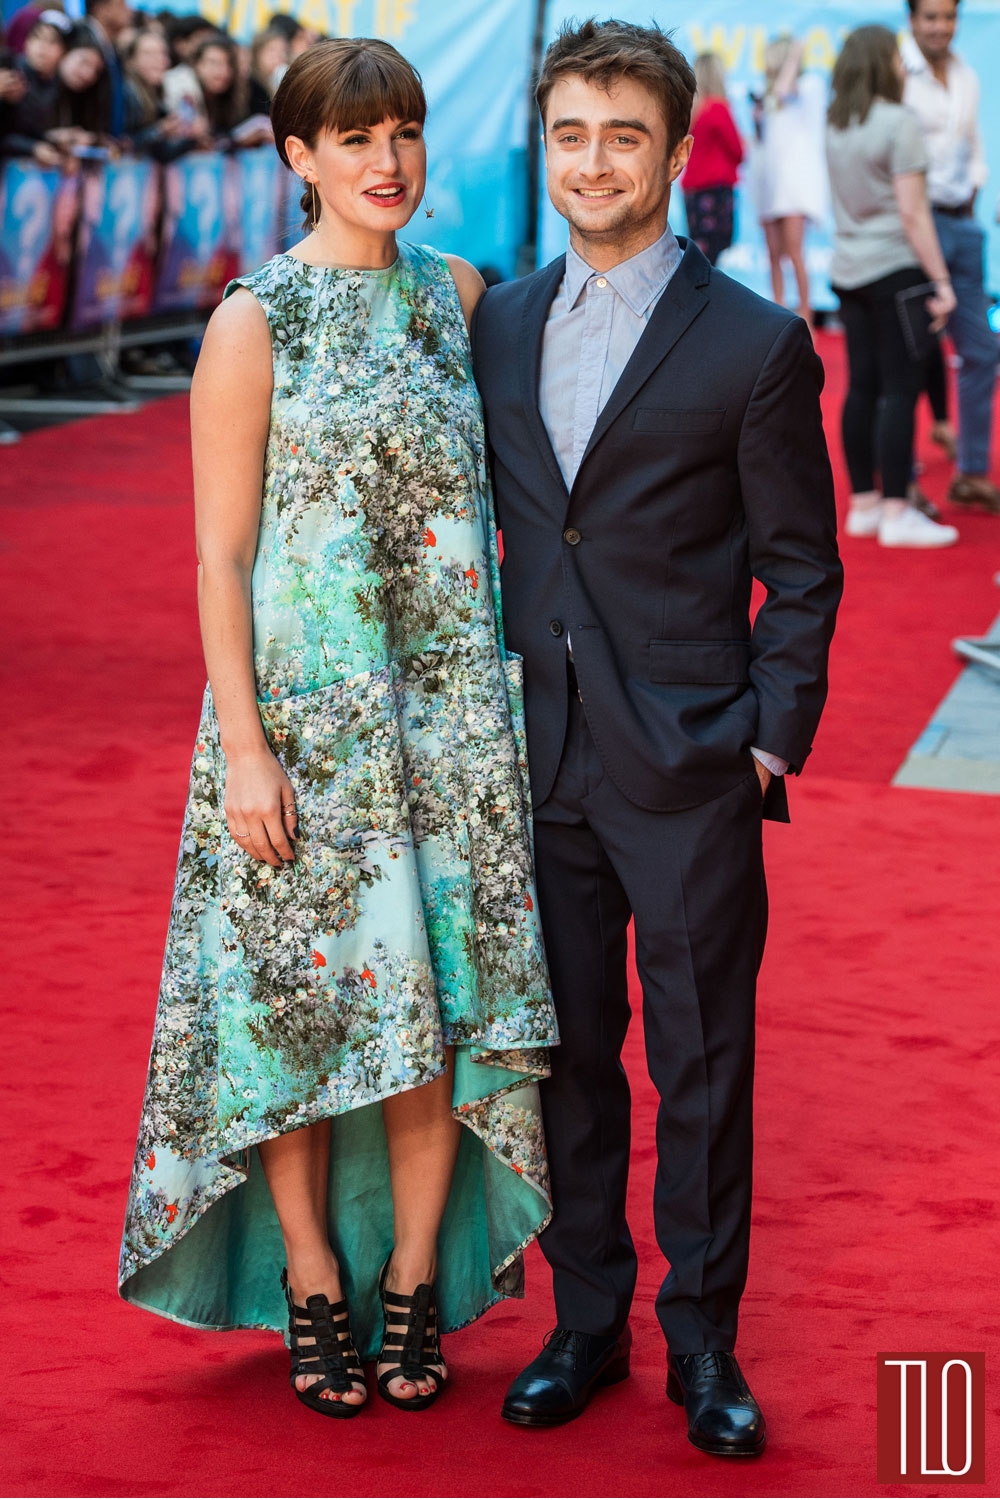 Jemima-Rooper-Daniel-Radcliffe-What-If-London-Premiere-Red-Carpet-Tom-Lorenzo-Site-TLO (1)